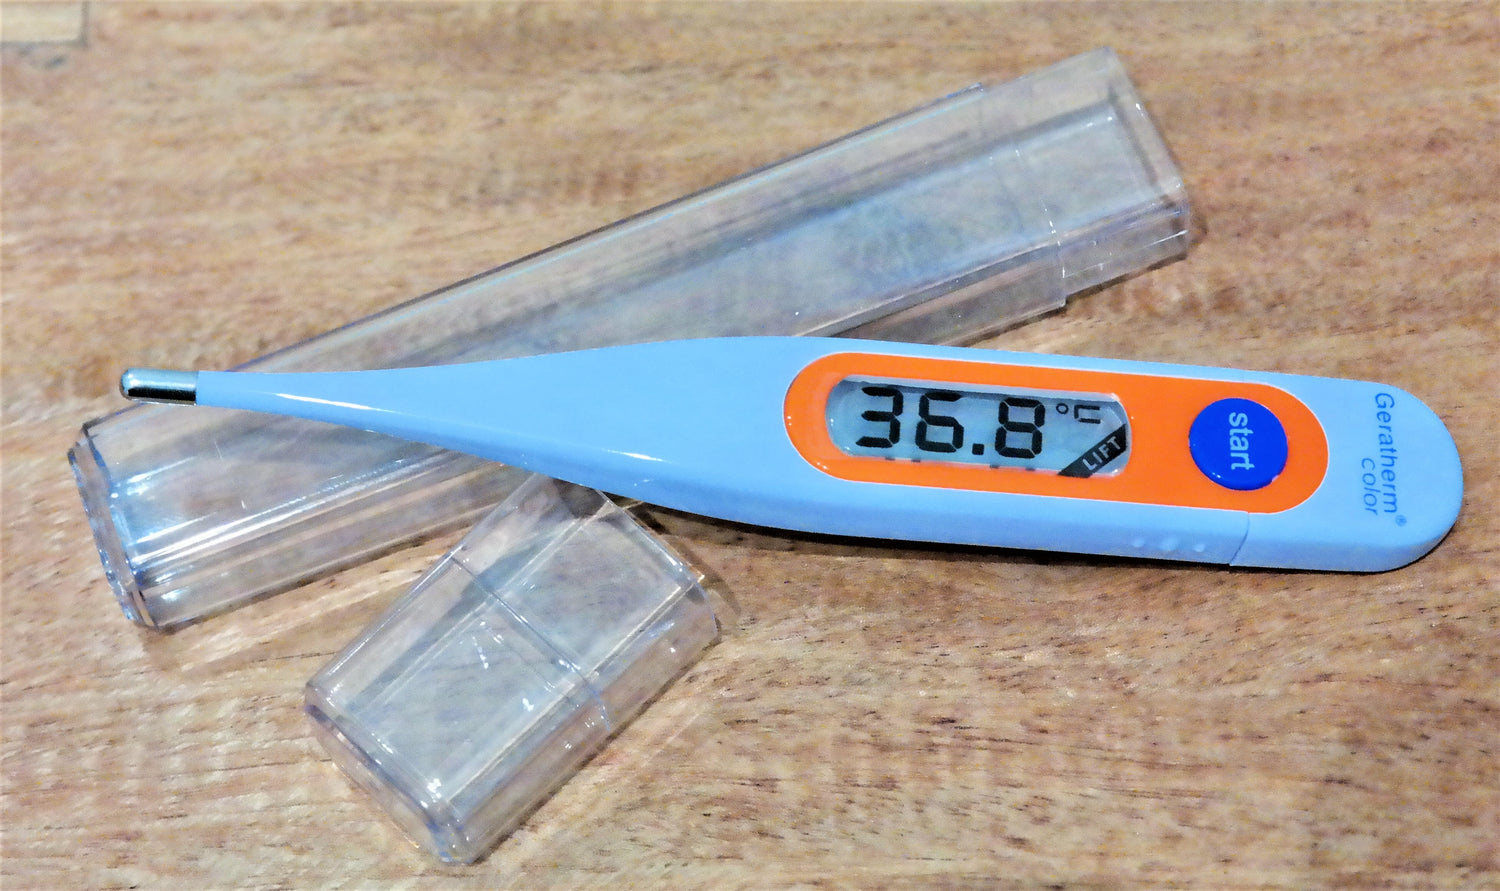 HG Digitalt Termometer, orange